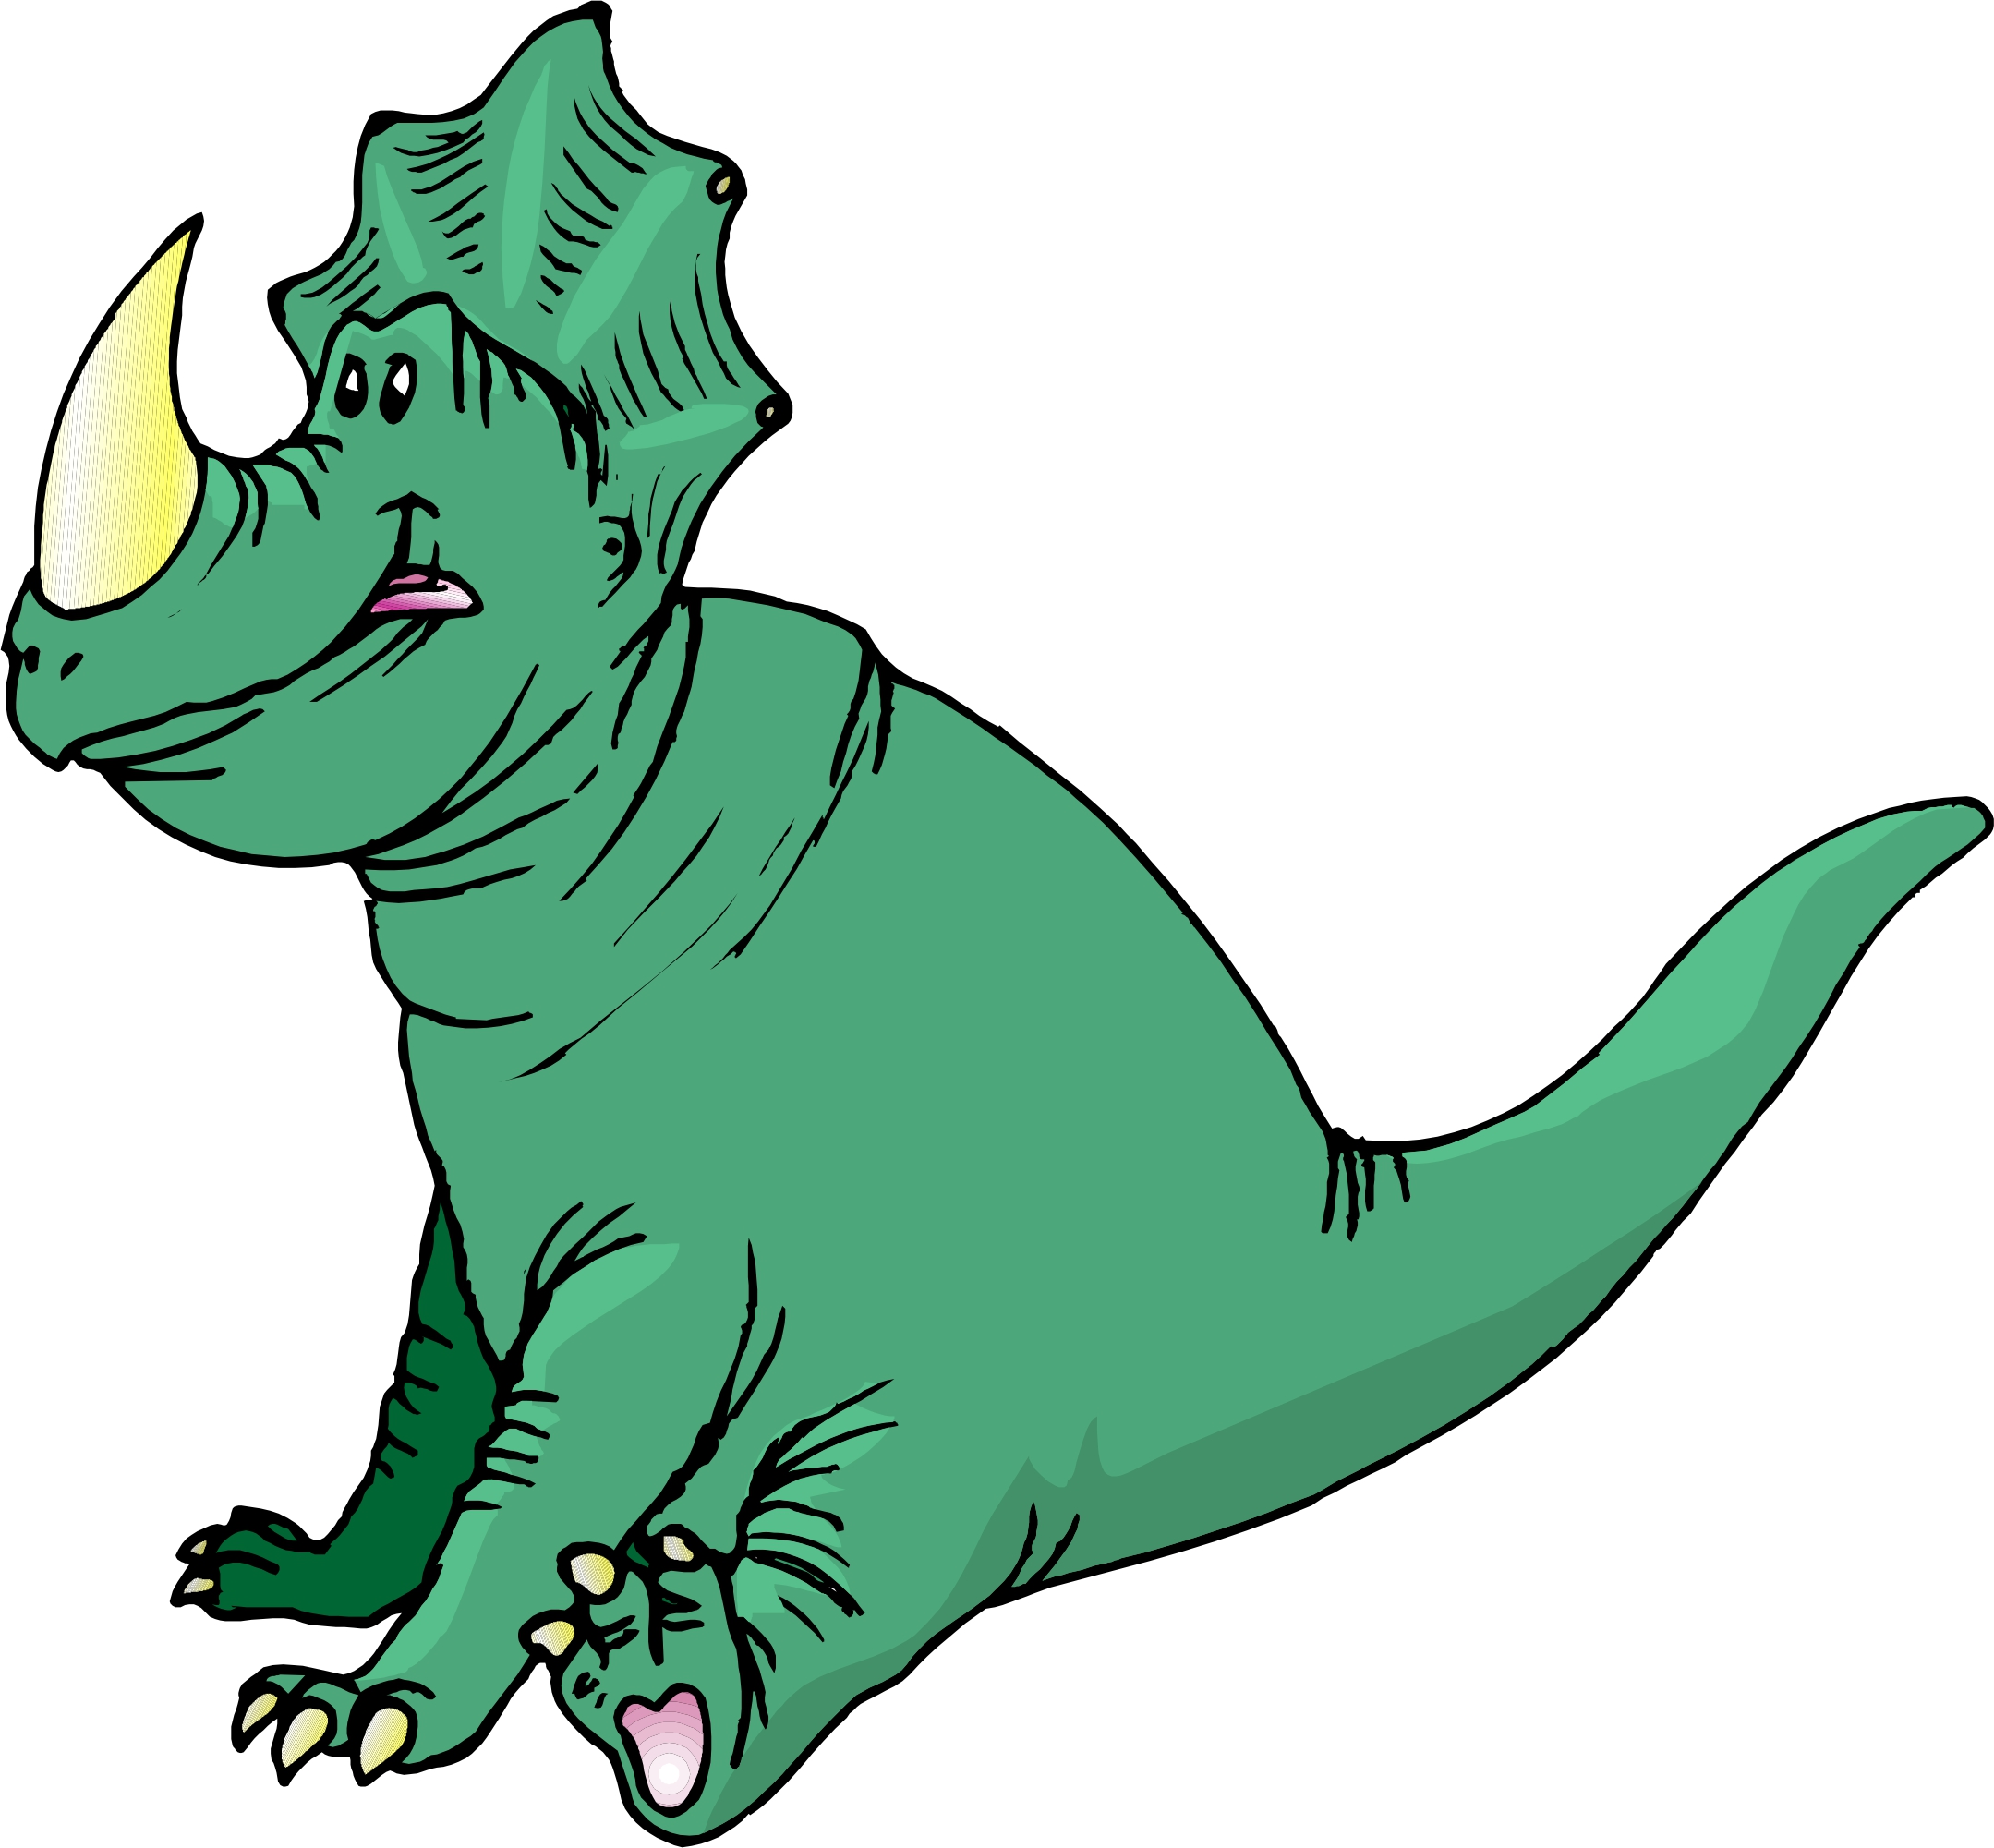  cartoon dinosaur images